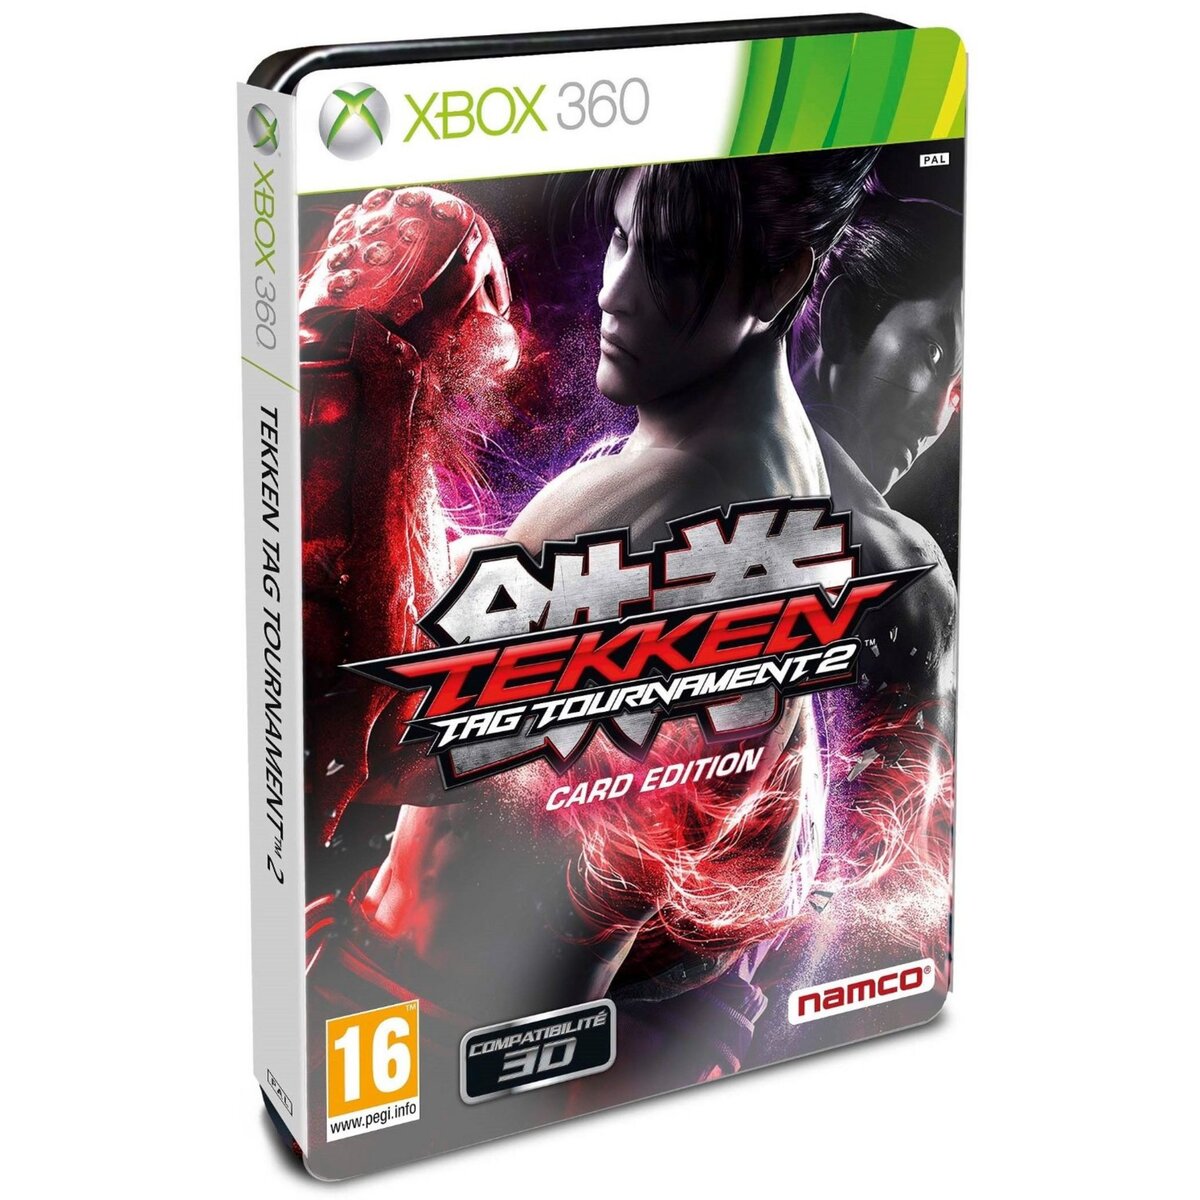 Tekken Tag Tournament 2 Card Edition Xbox 360